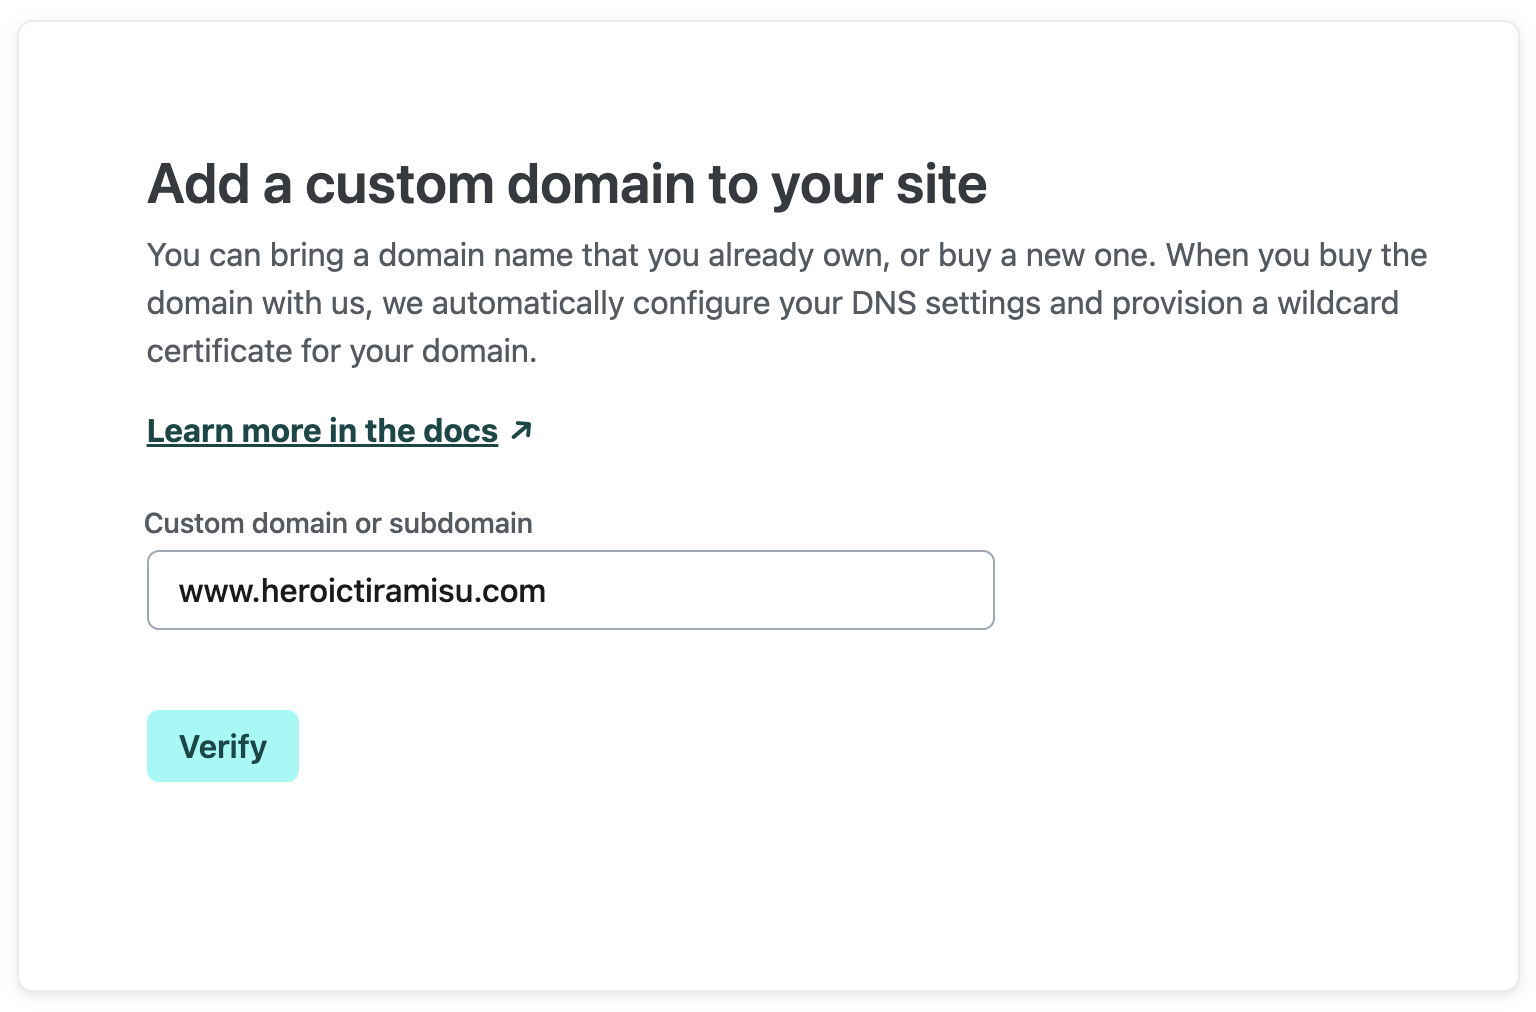 Adding the custom domain in Netlify